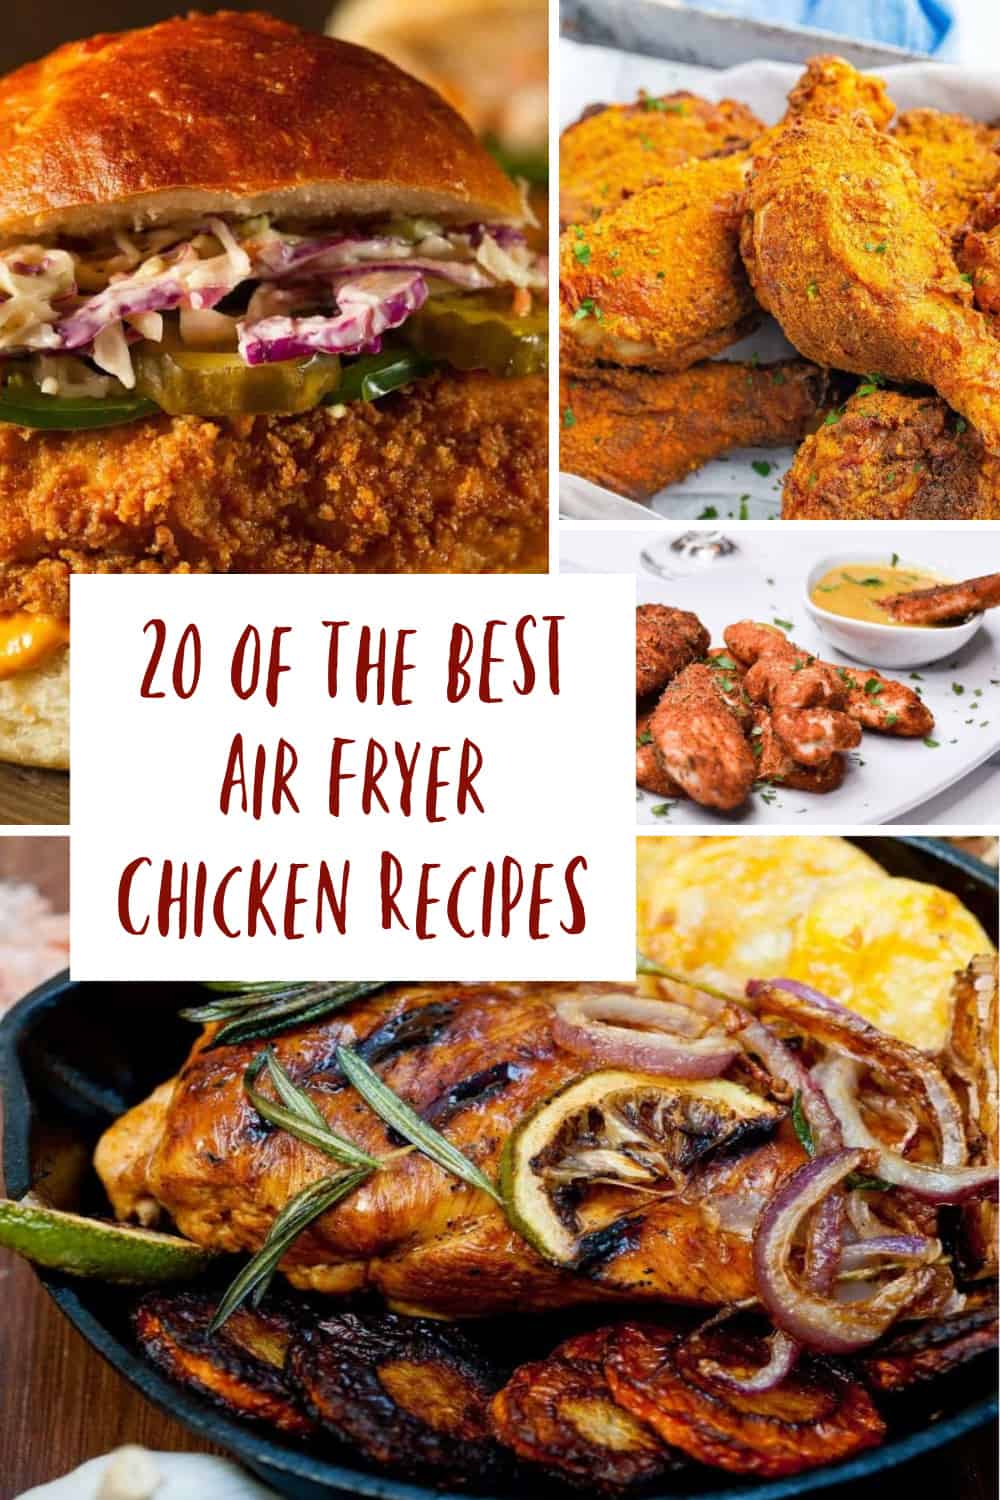 https://forktospoon.com/wp-content/uploads/2021/10/20-of-the-Best-Air-Fryer-Chicken-Recipes.jpg